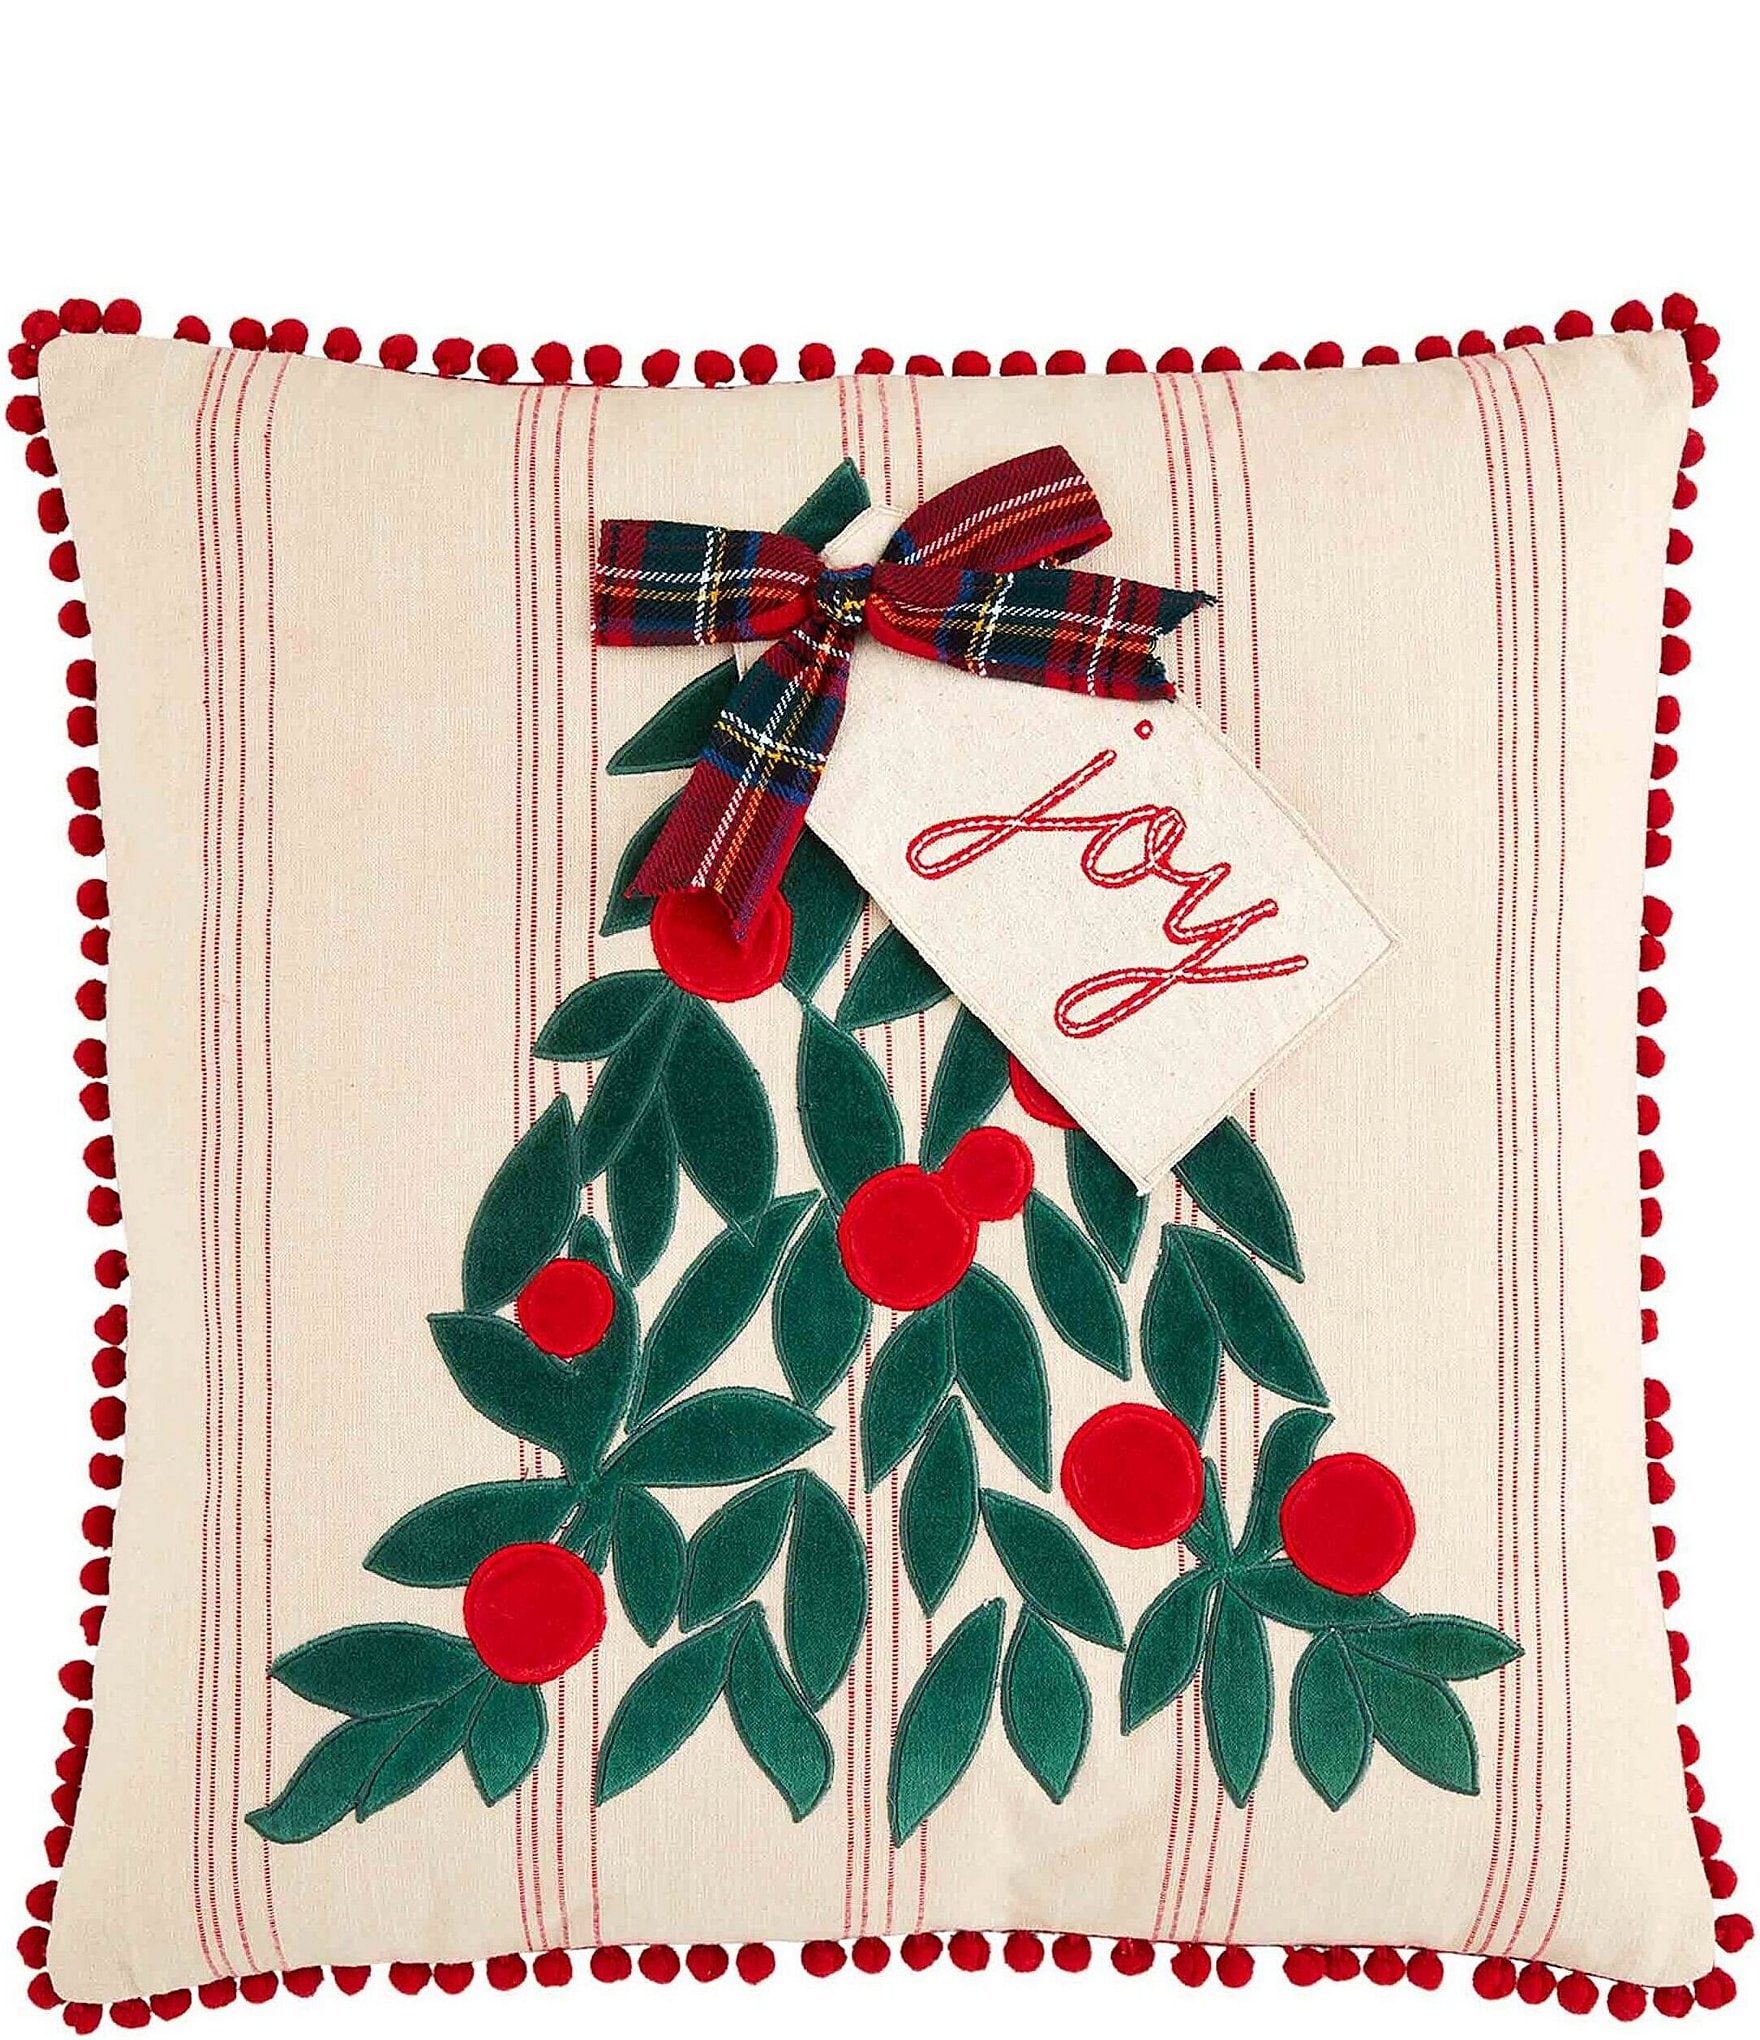 Embroidered Velevet Christmas Pillows